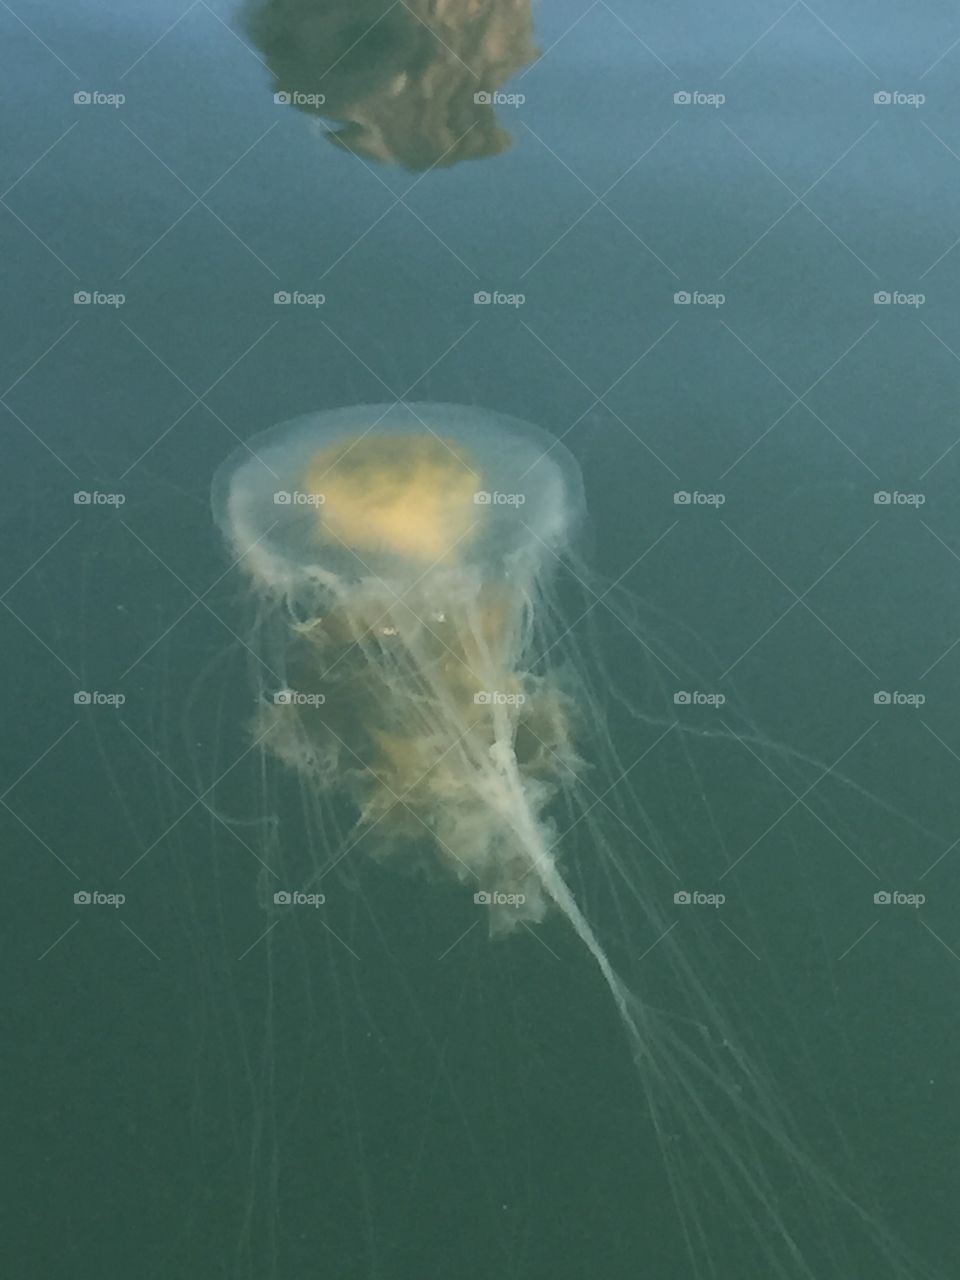 |July 2018| jellyfish in Nisqually Delta near Nisqually, WA. 